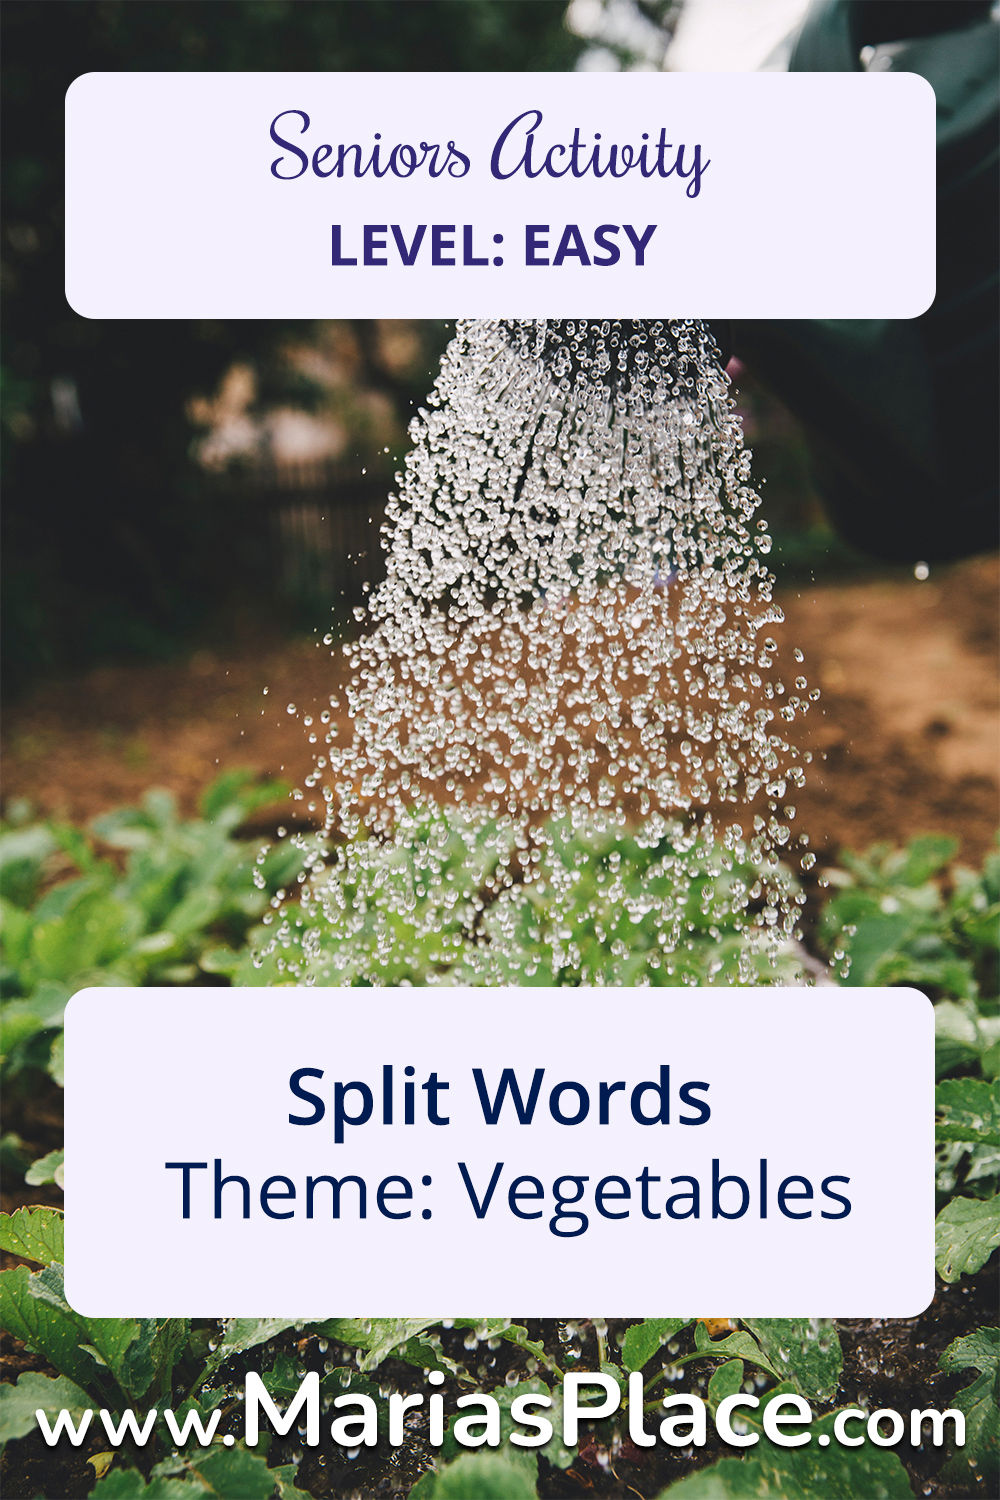 Split Words, Vegetables